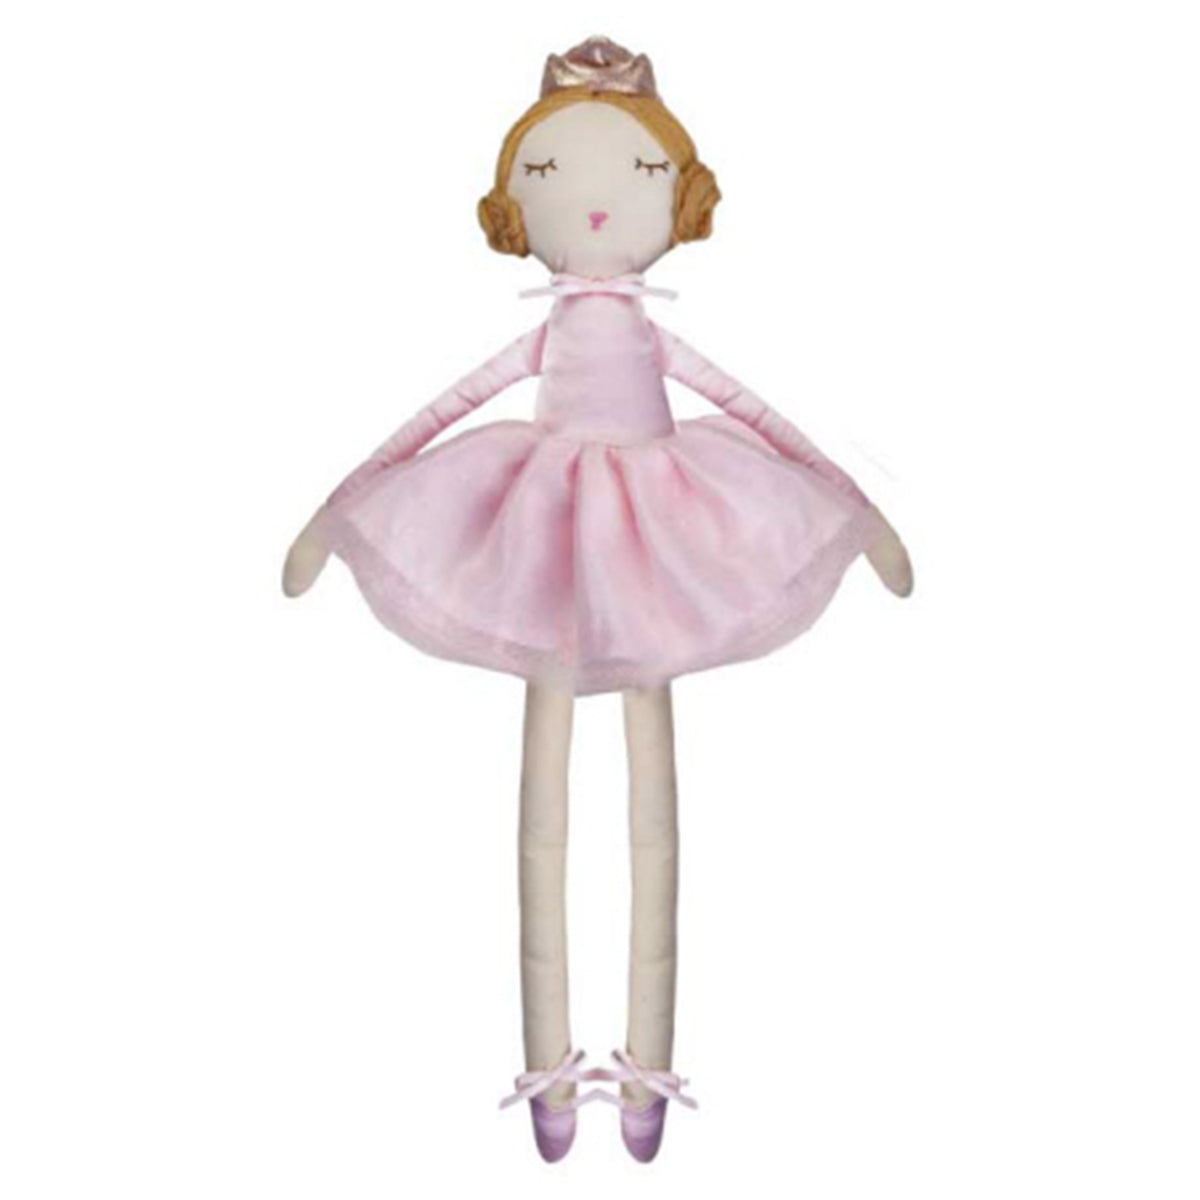 Bella the Ballerina Soft Doll